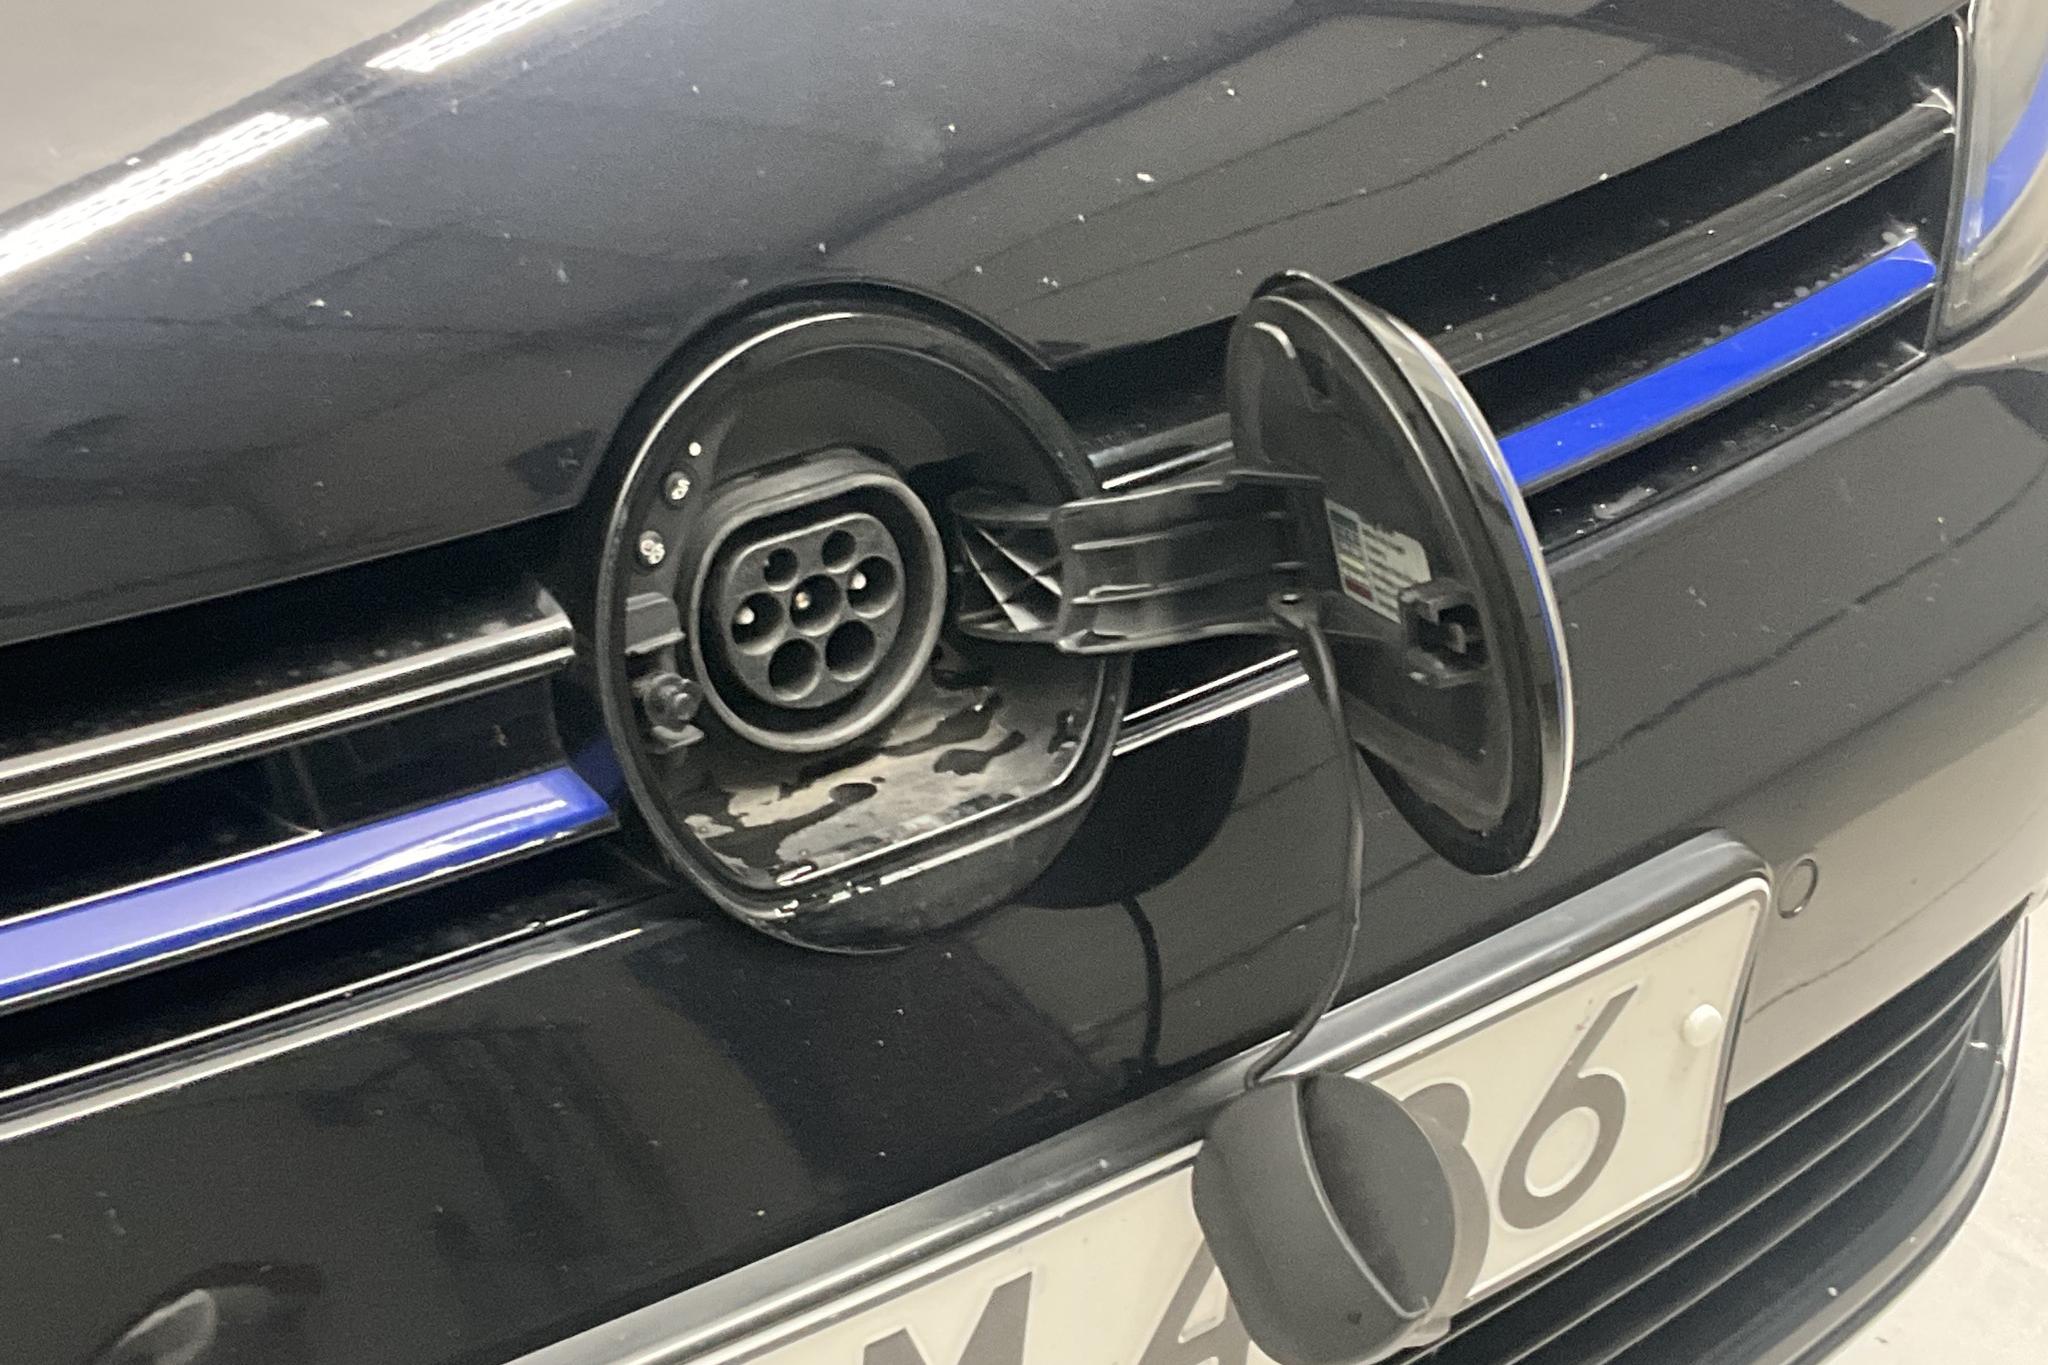 VW Golf VII 1.4 Plug-in-Hybrid 5dr (204hk) - 115 390 km - Automatic - black - 2016